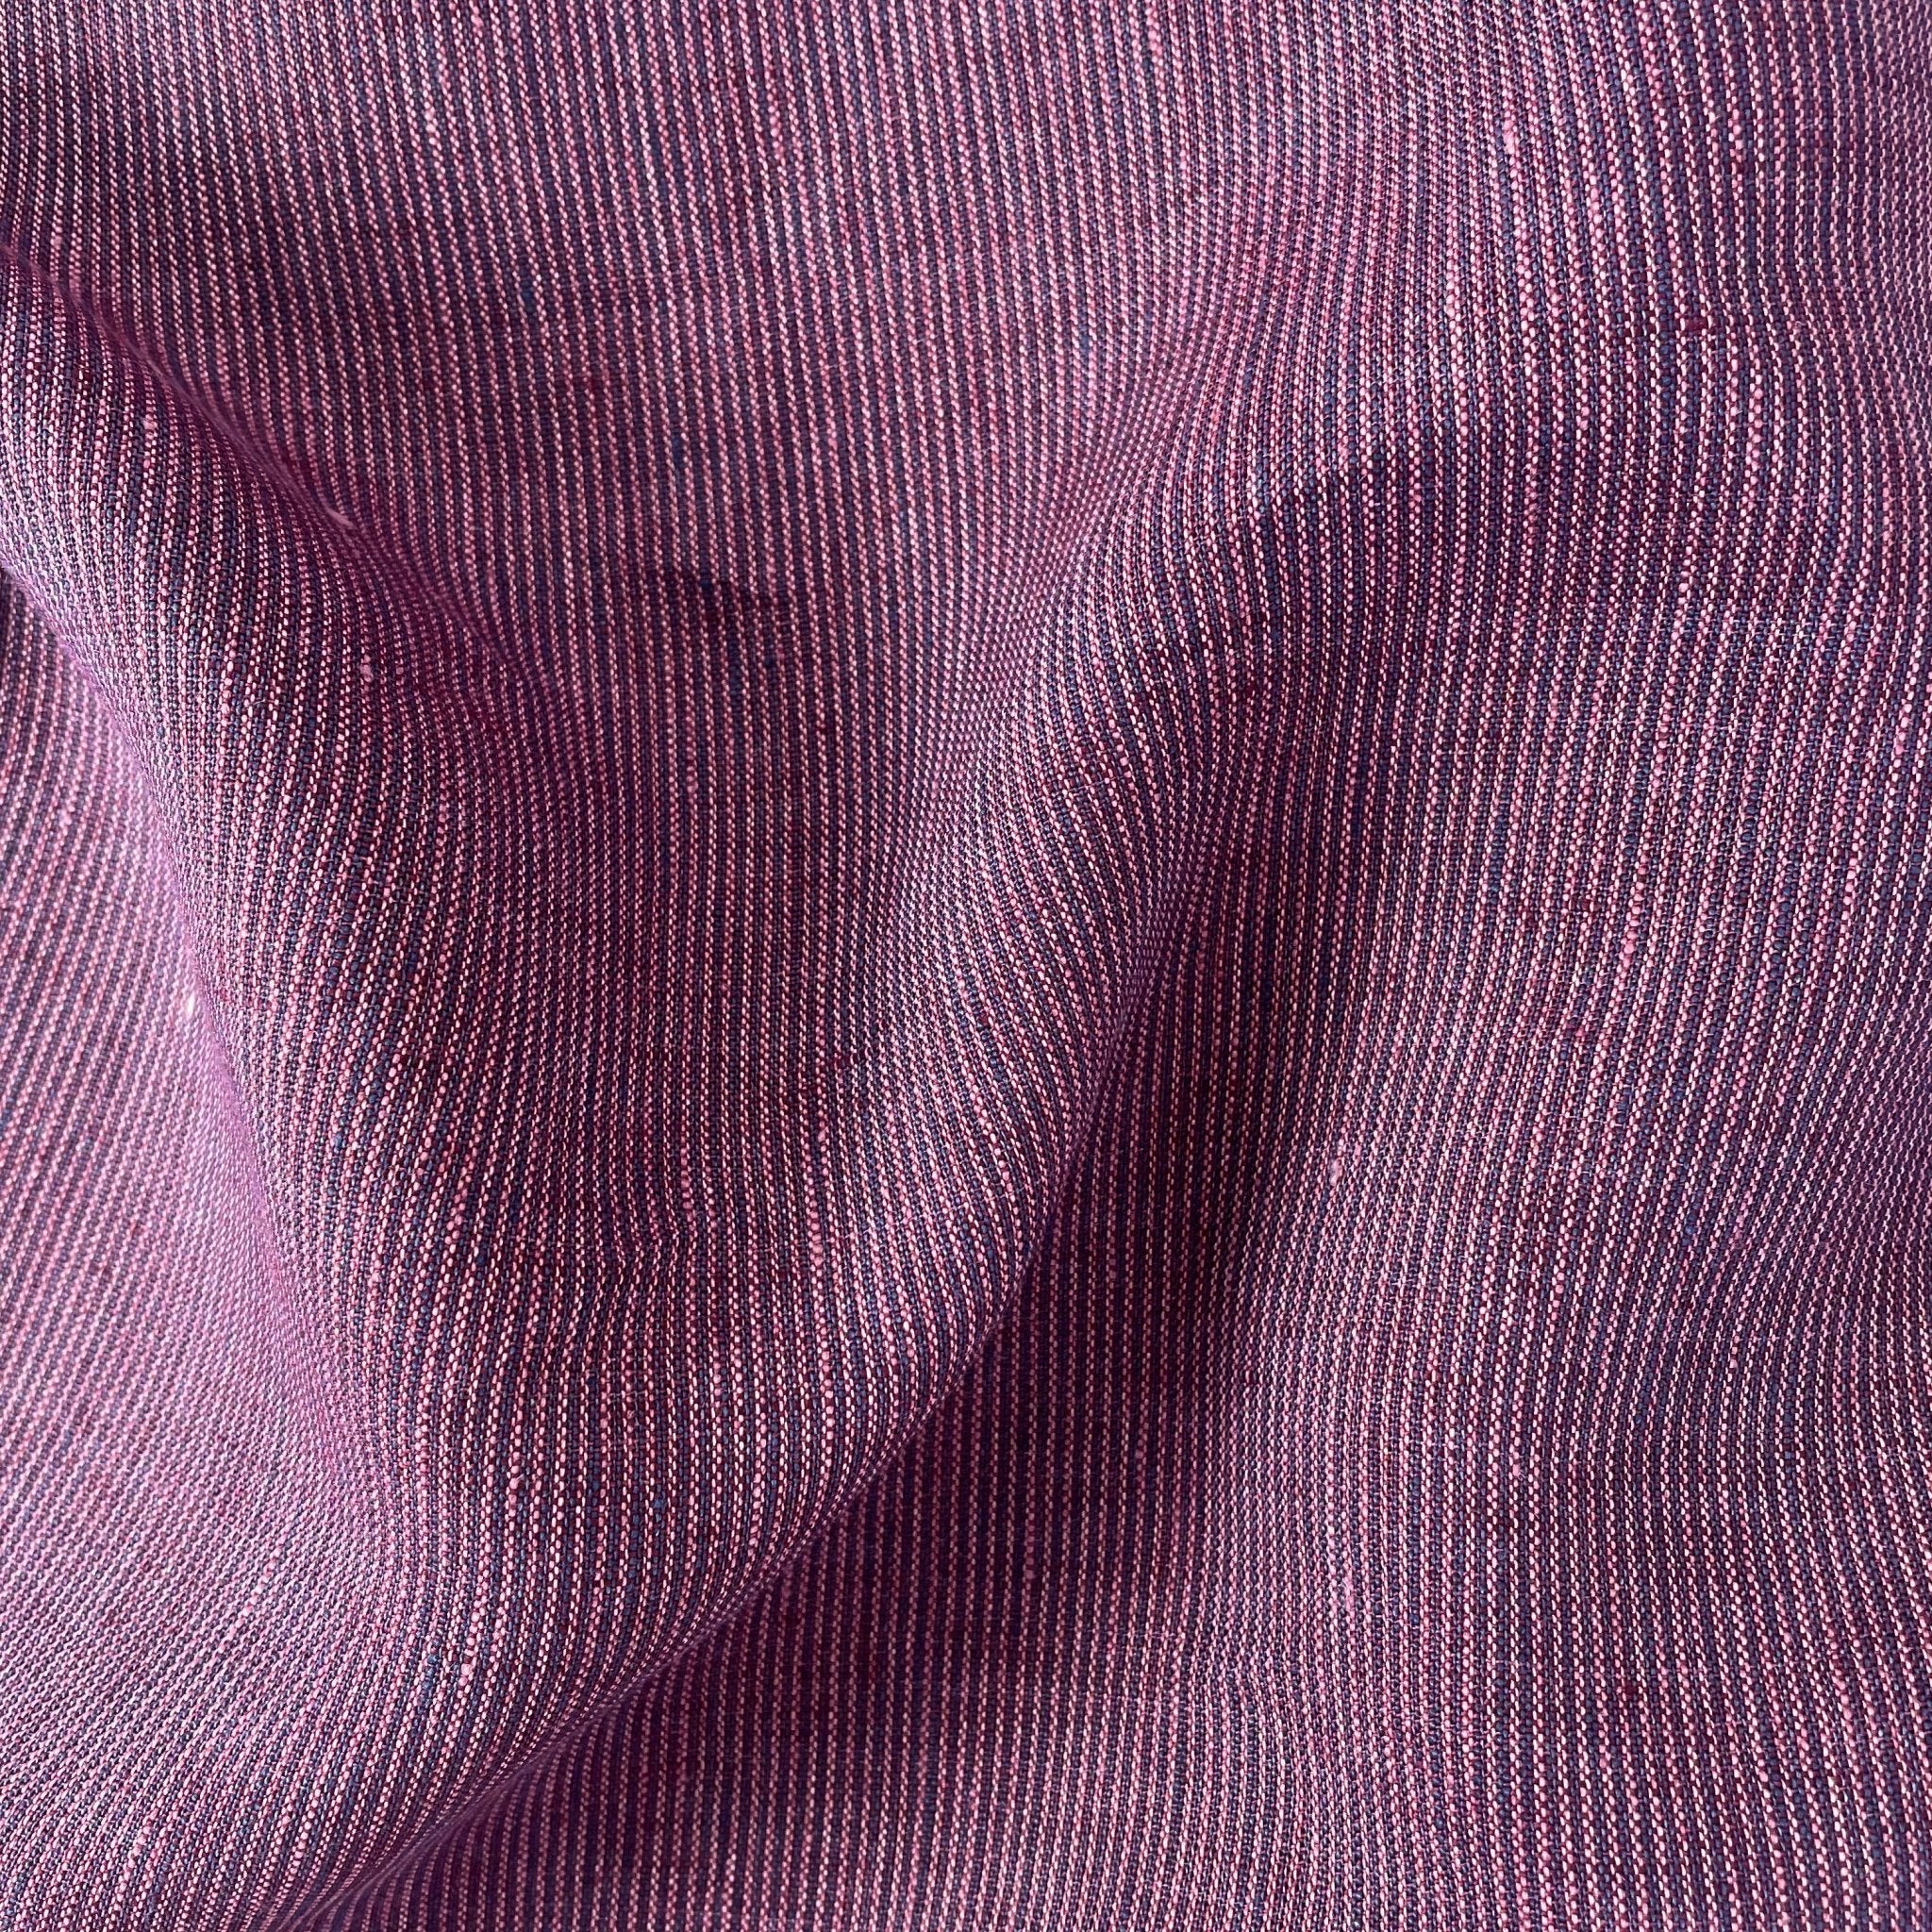 Linen Violet Stripe Fabric 6755 - The Linen Lab - Violet